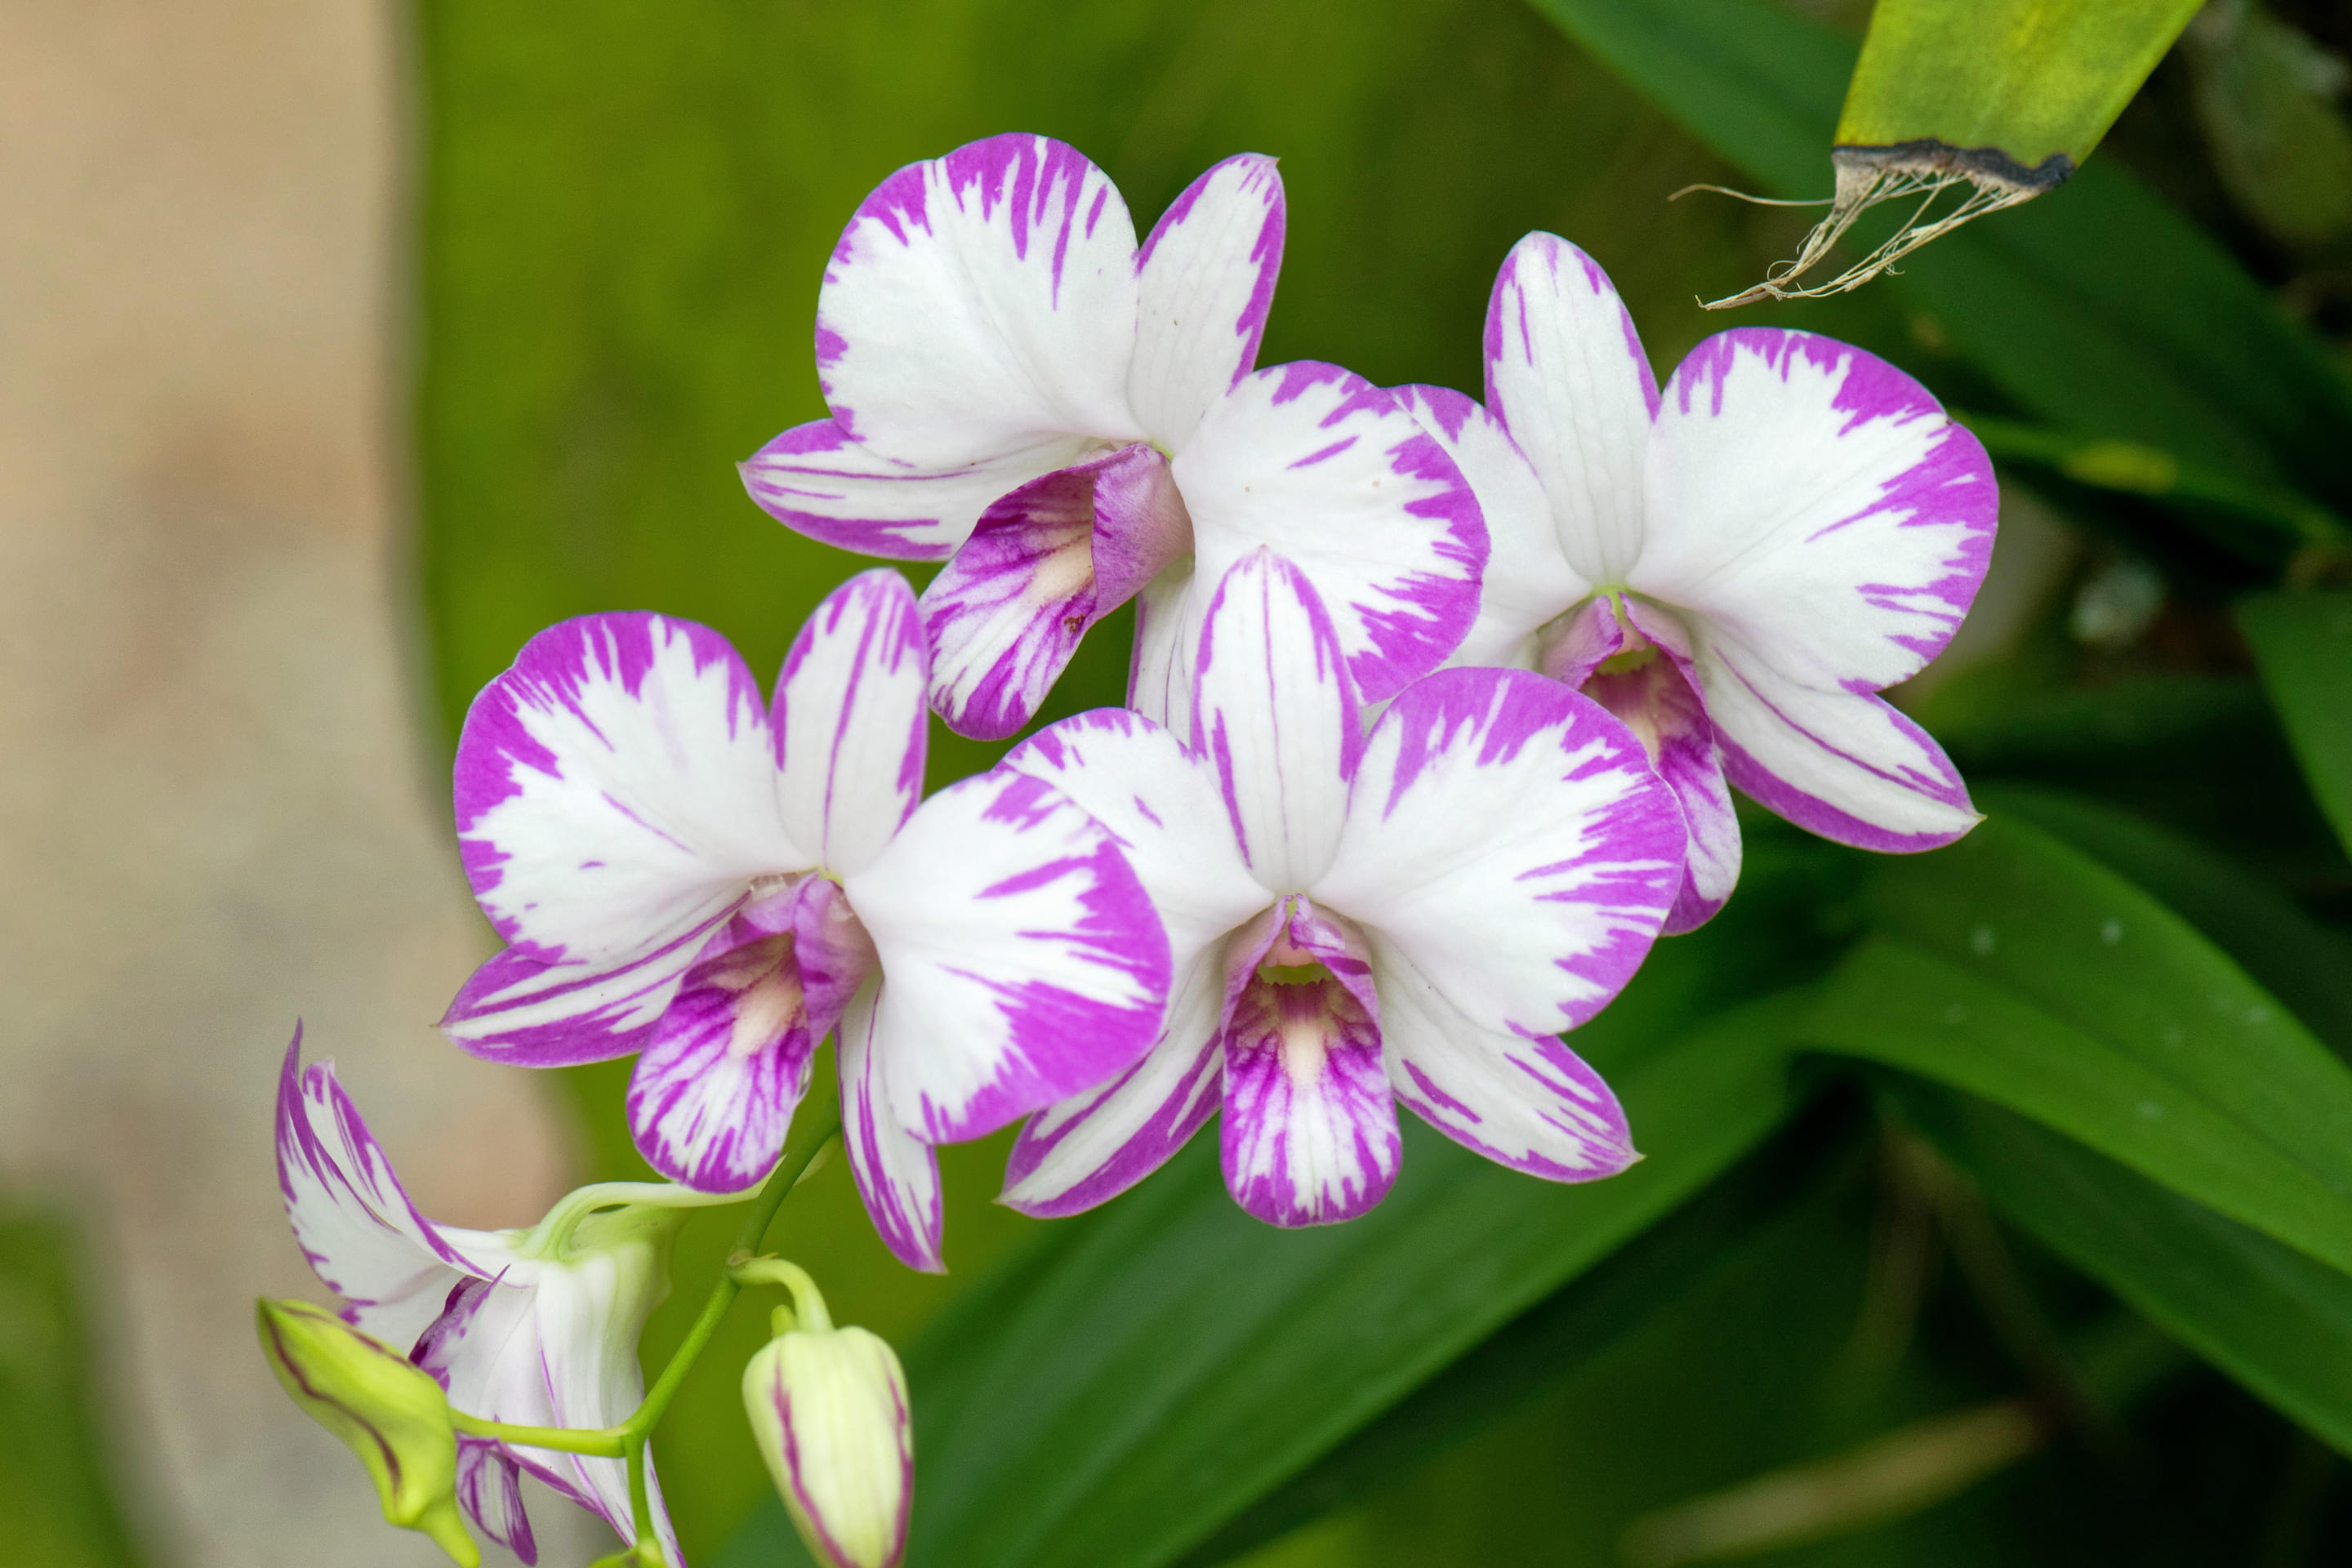 Sarawak Orchid Garden Overview